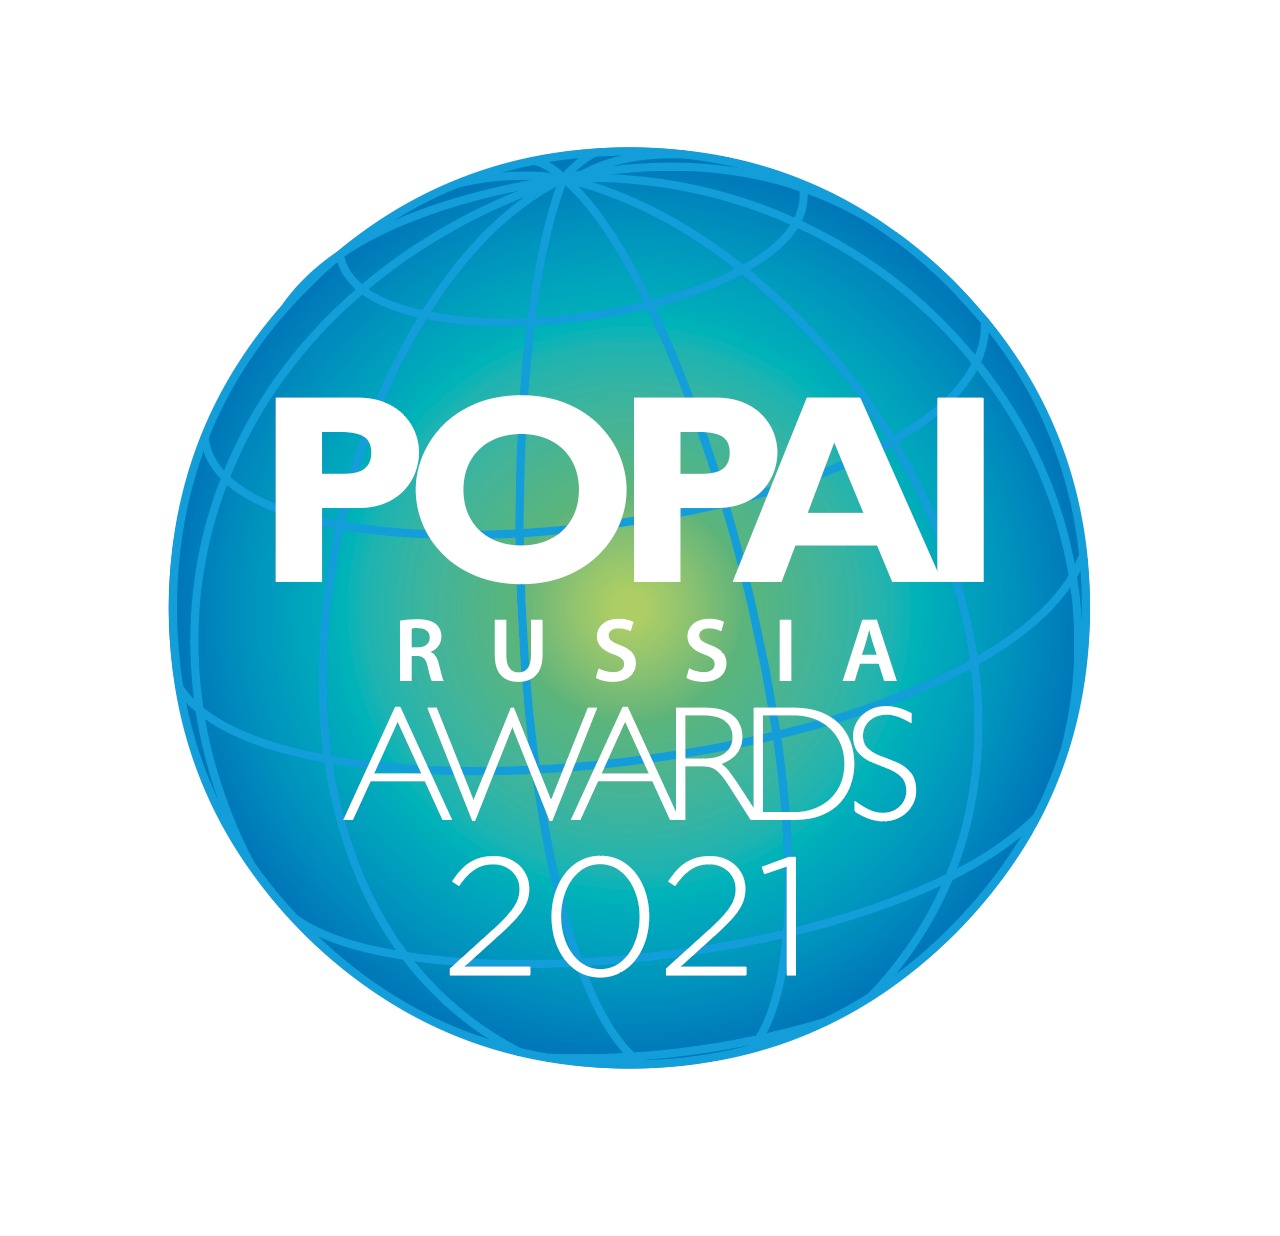          -  POPAI RUSSIA AWARDS 2021!